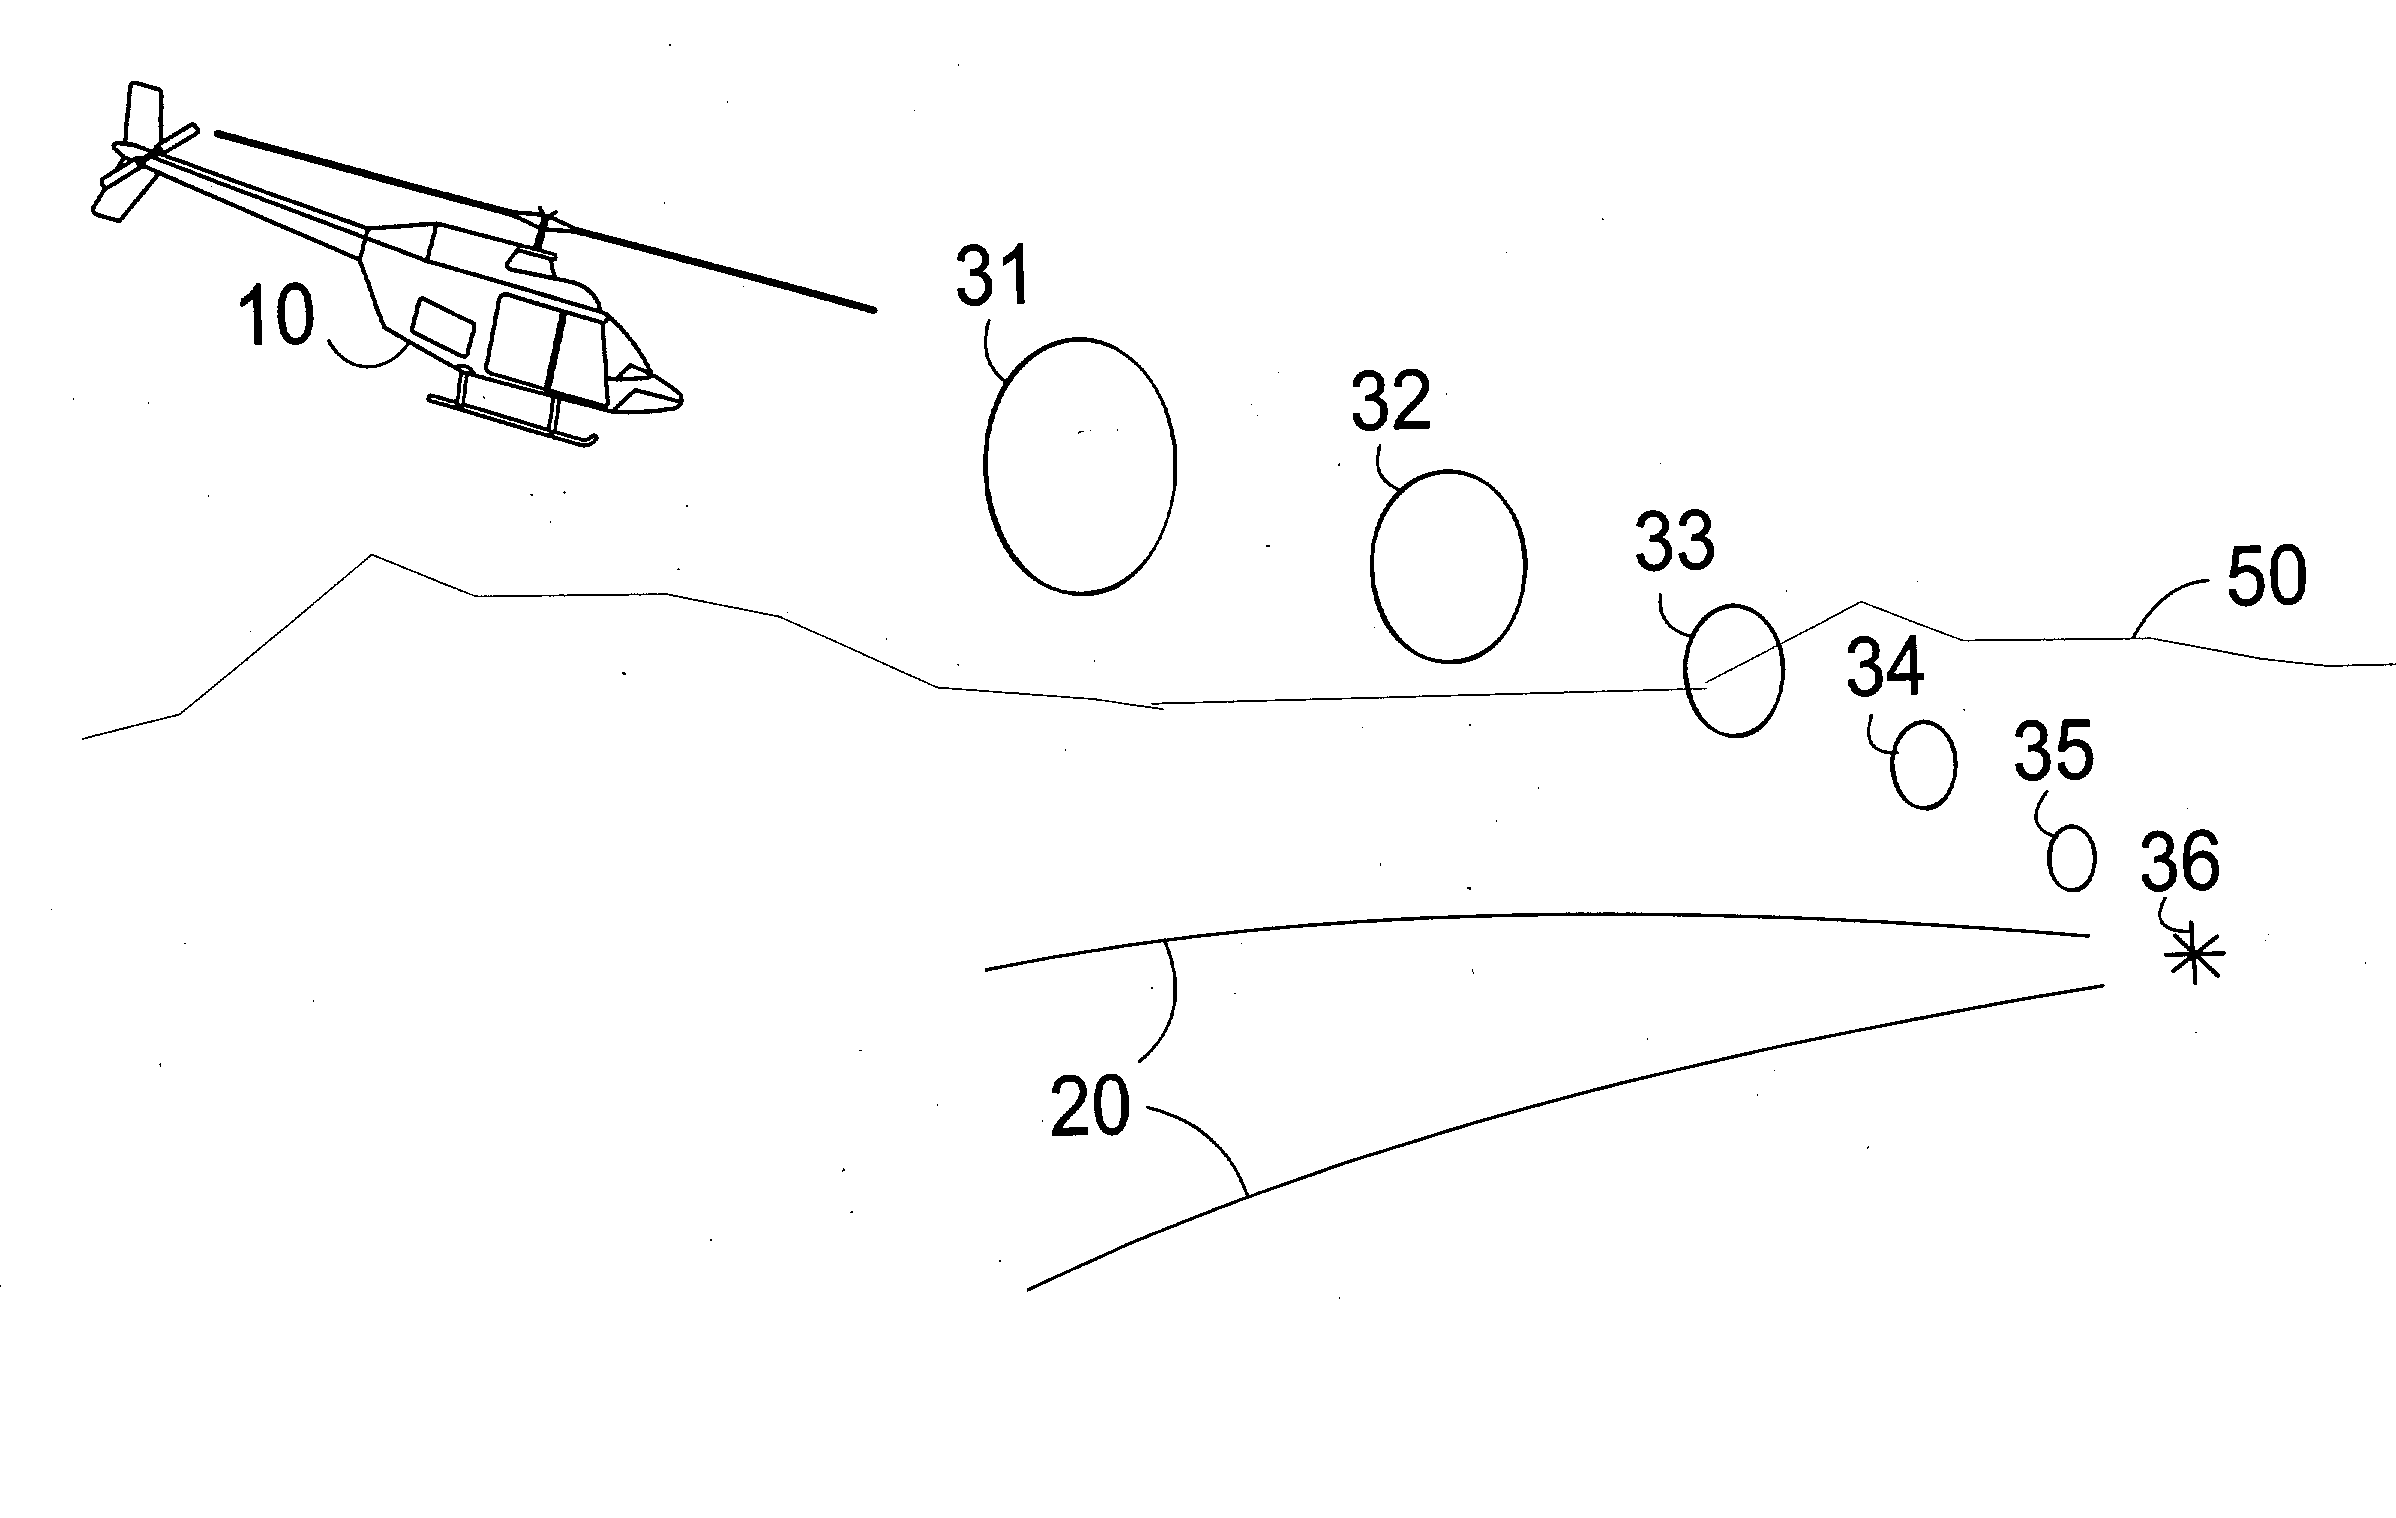 Aircraft future position and flight path indicator symbology